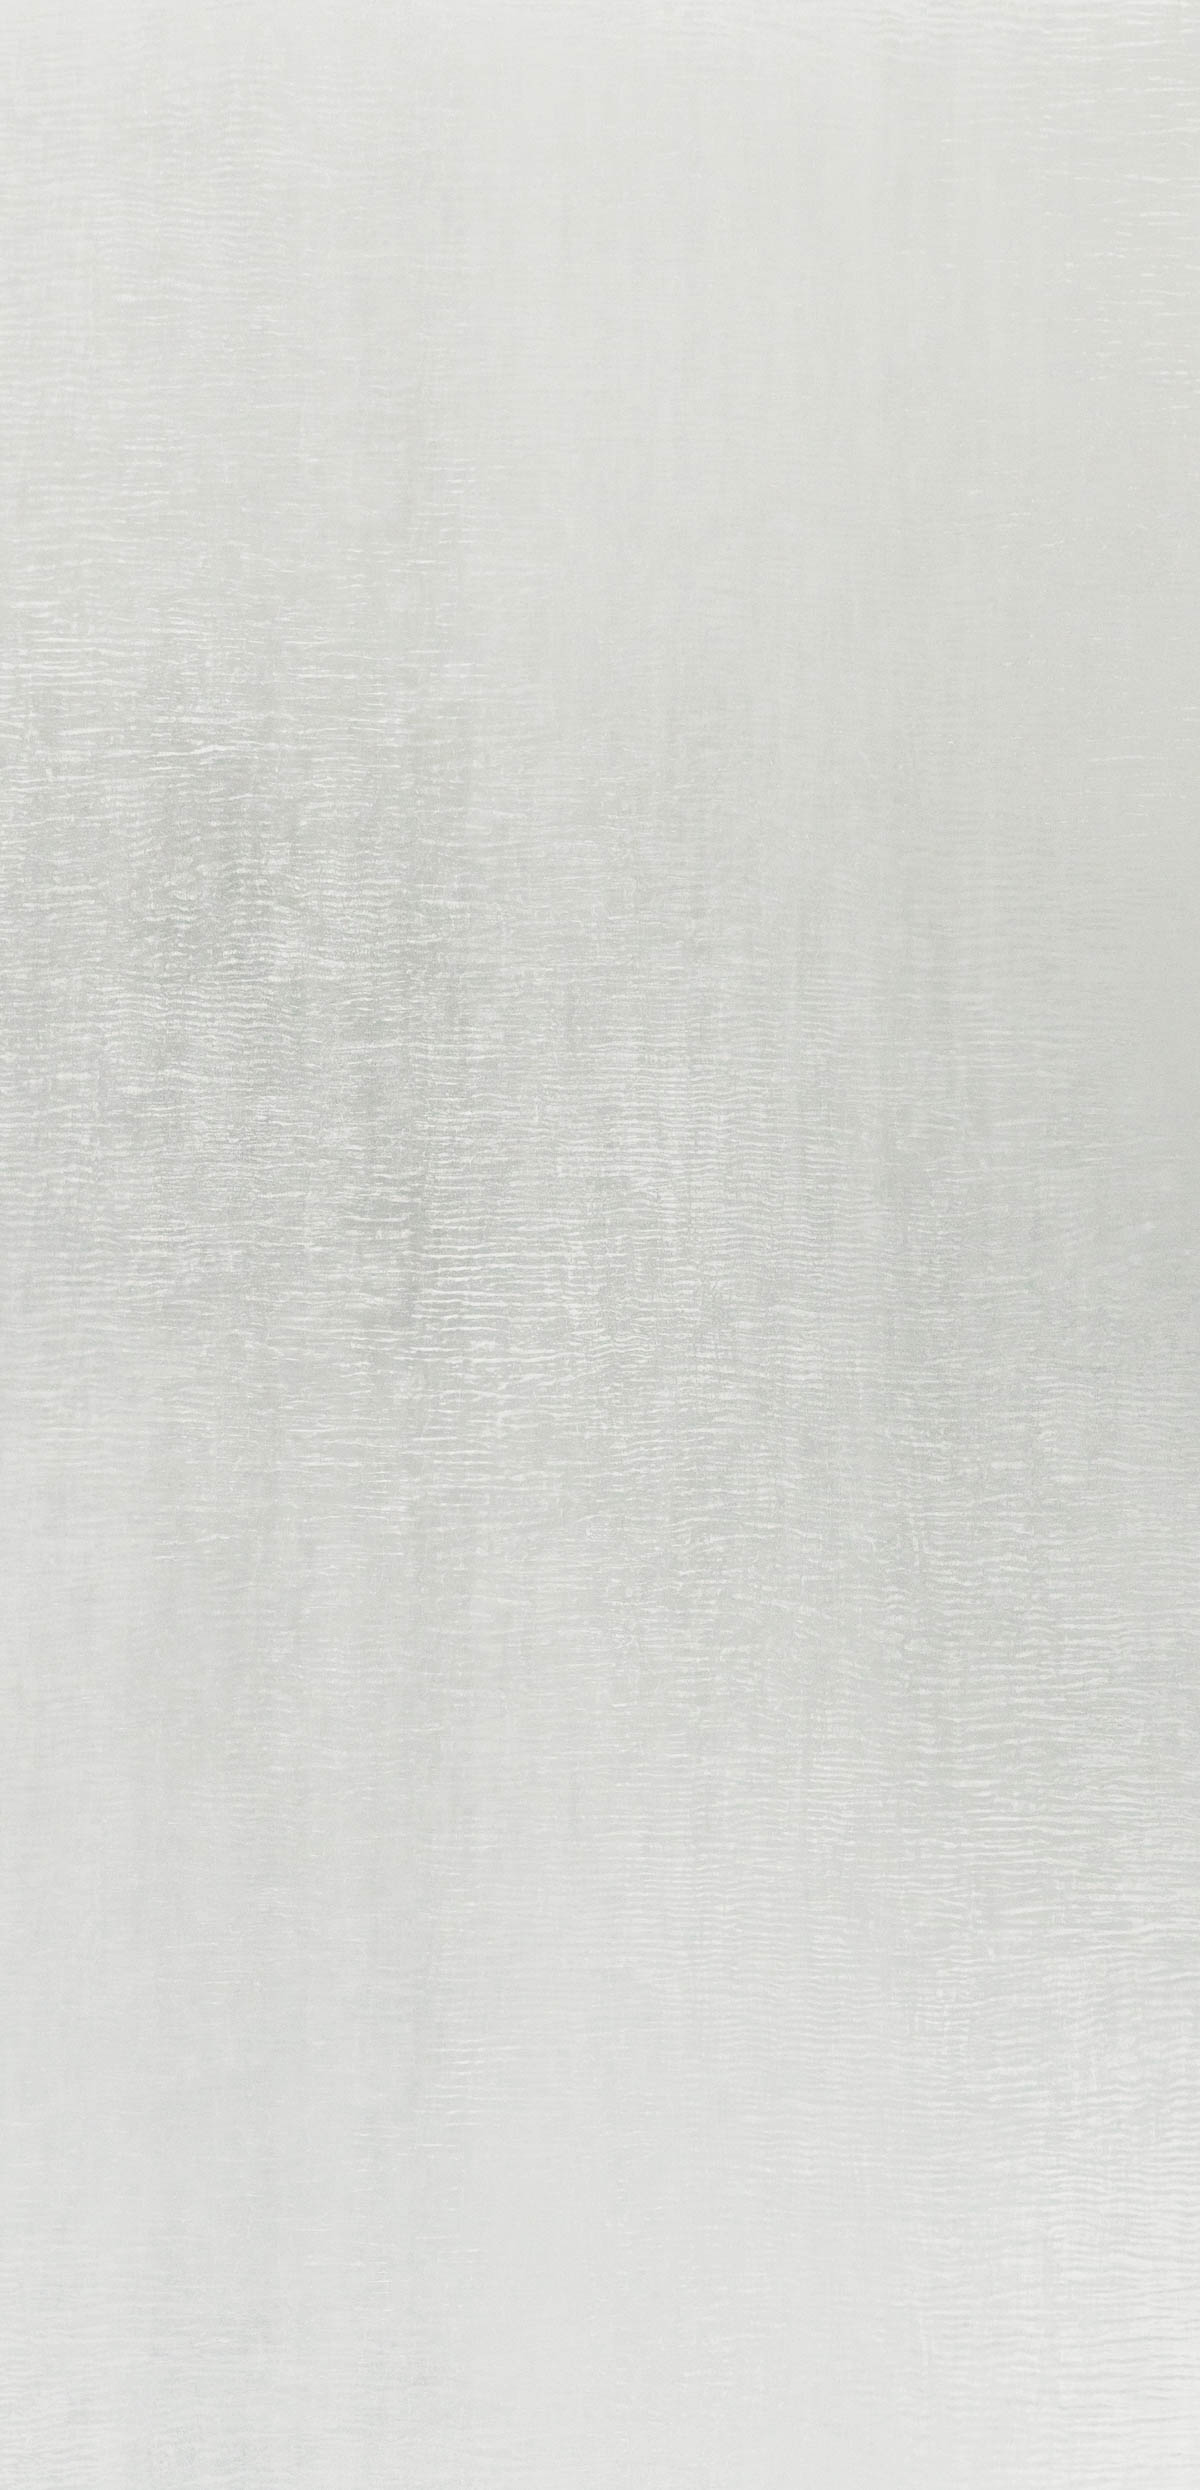 Neutral grey 026-panel